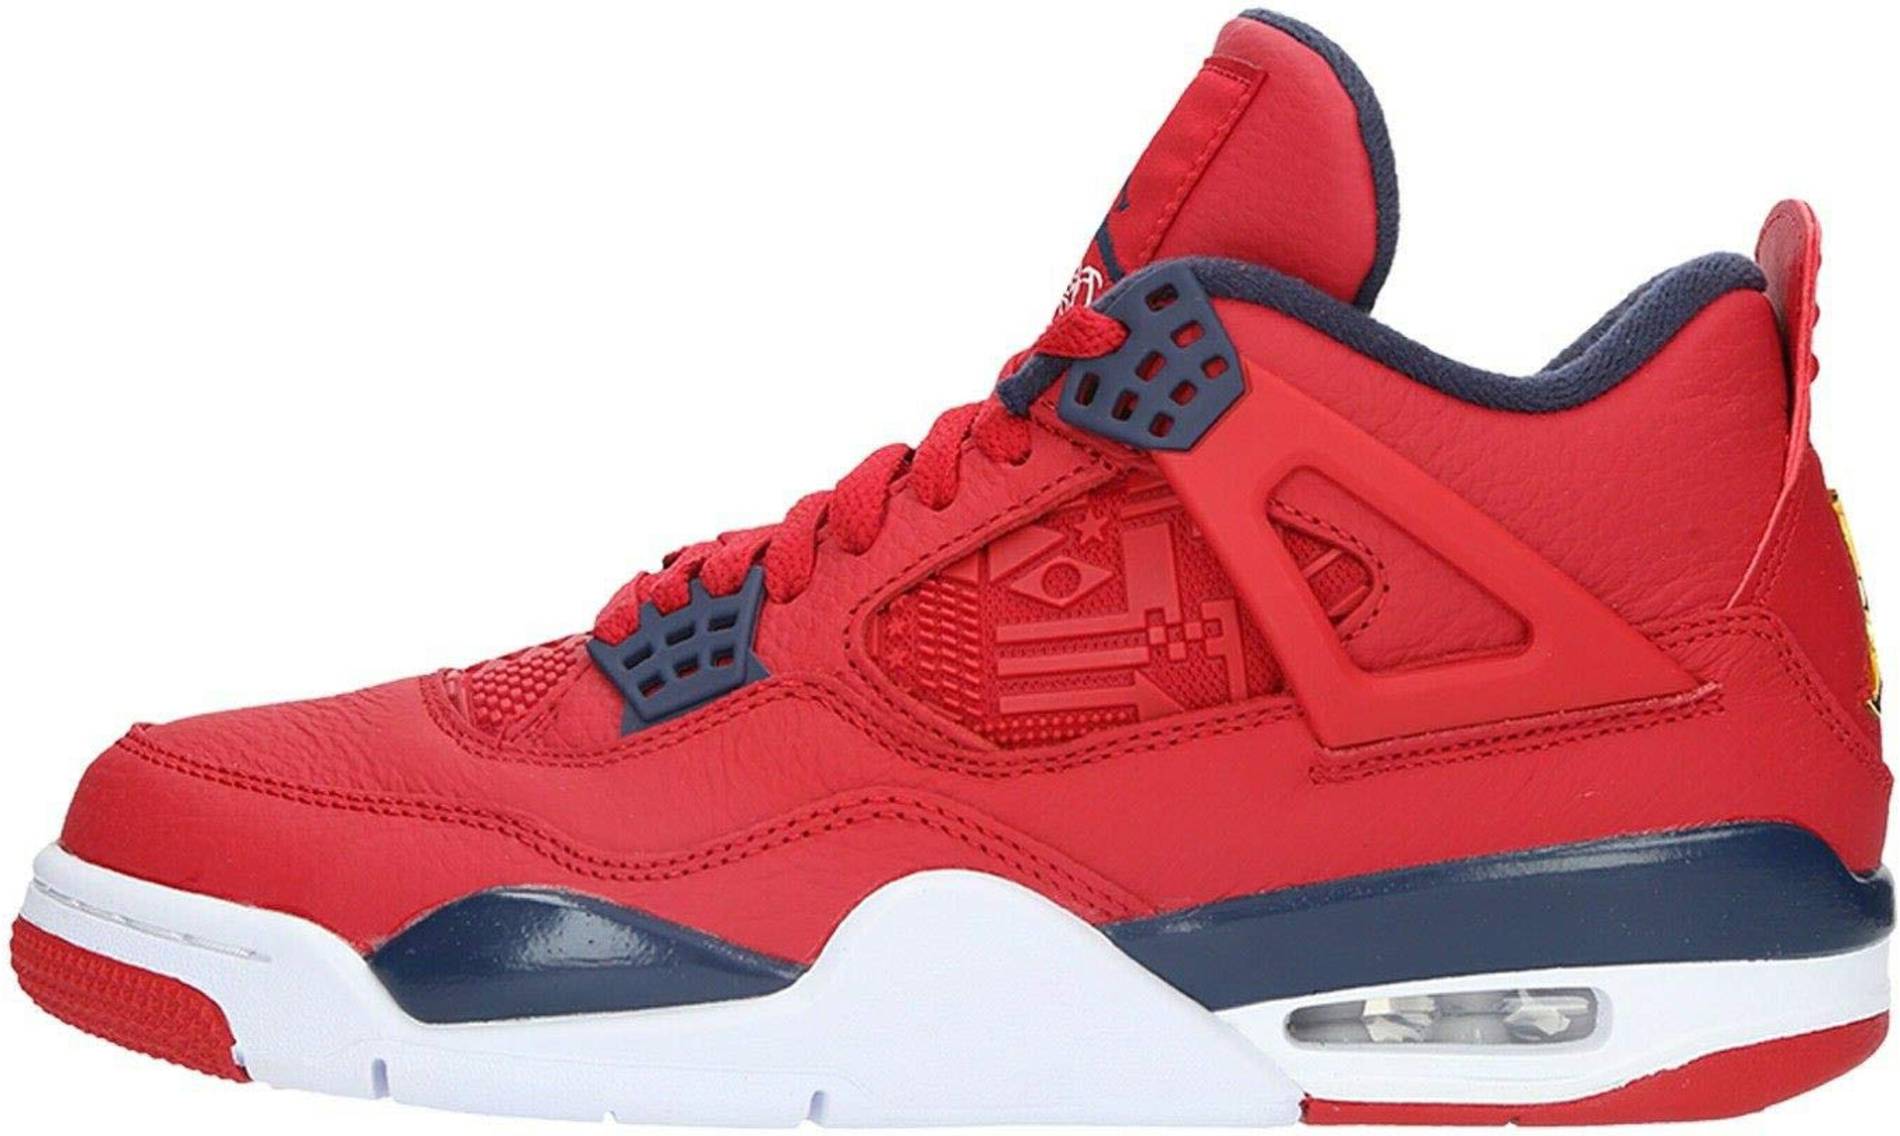 Save 9% on Red Jordan Basketball Shoes 